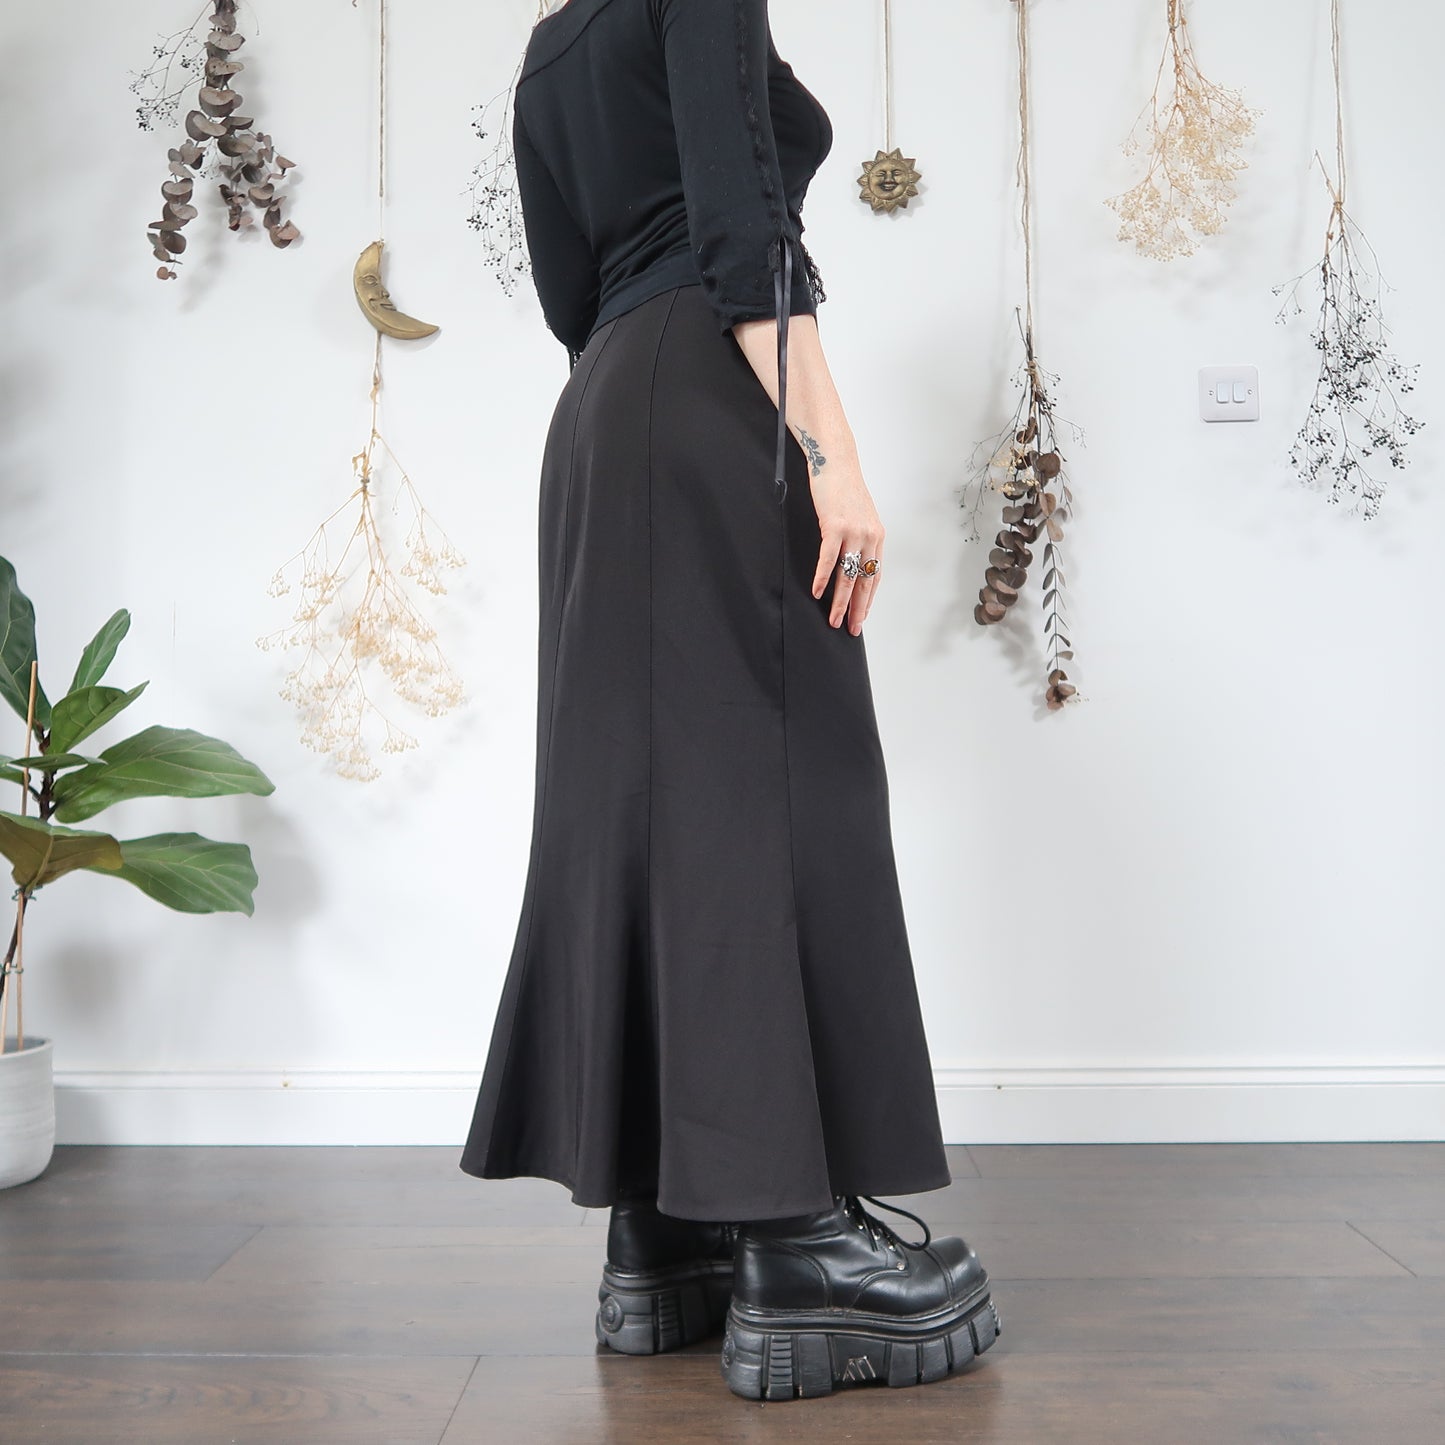 Black skirt - size M